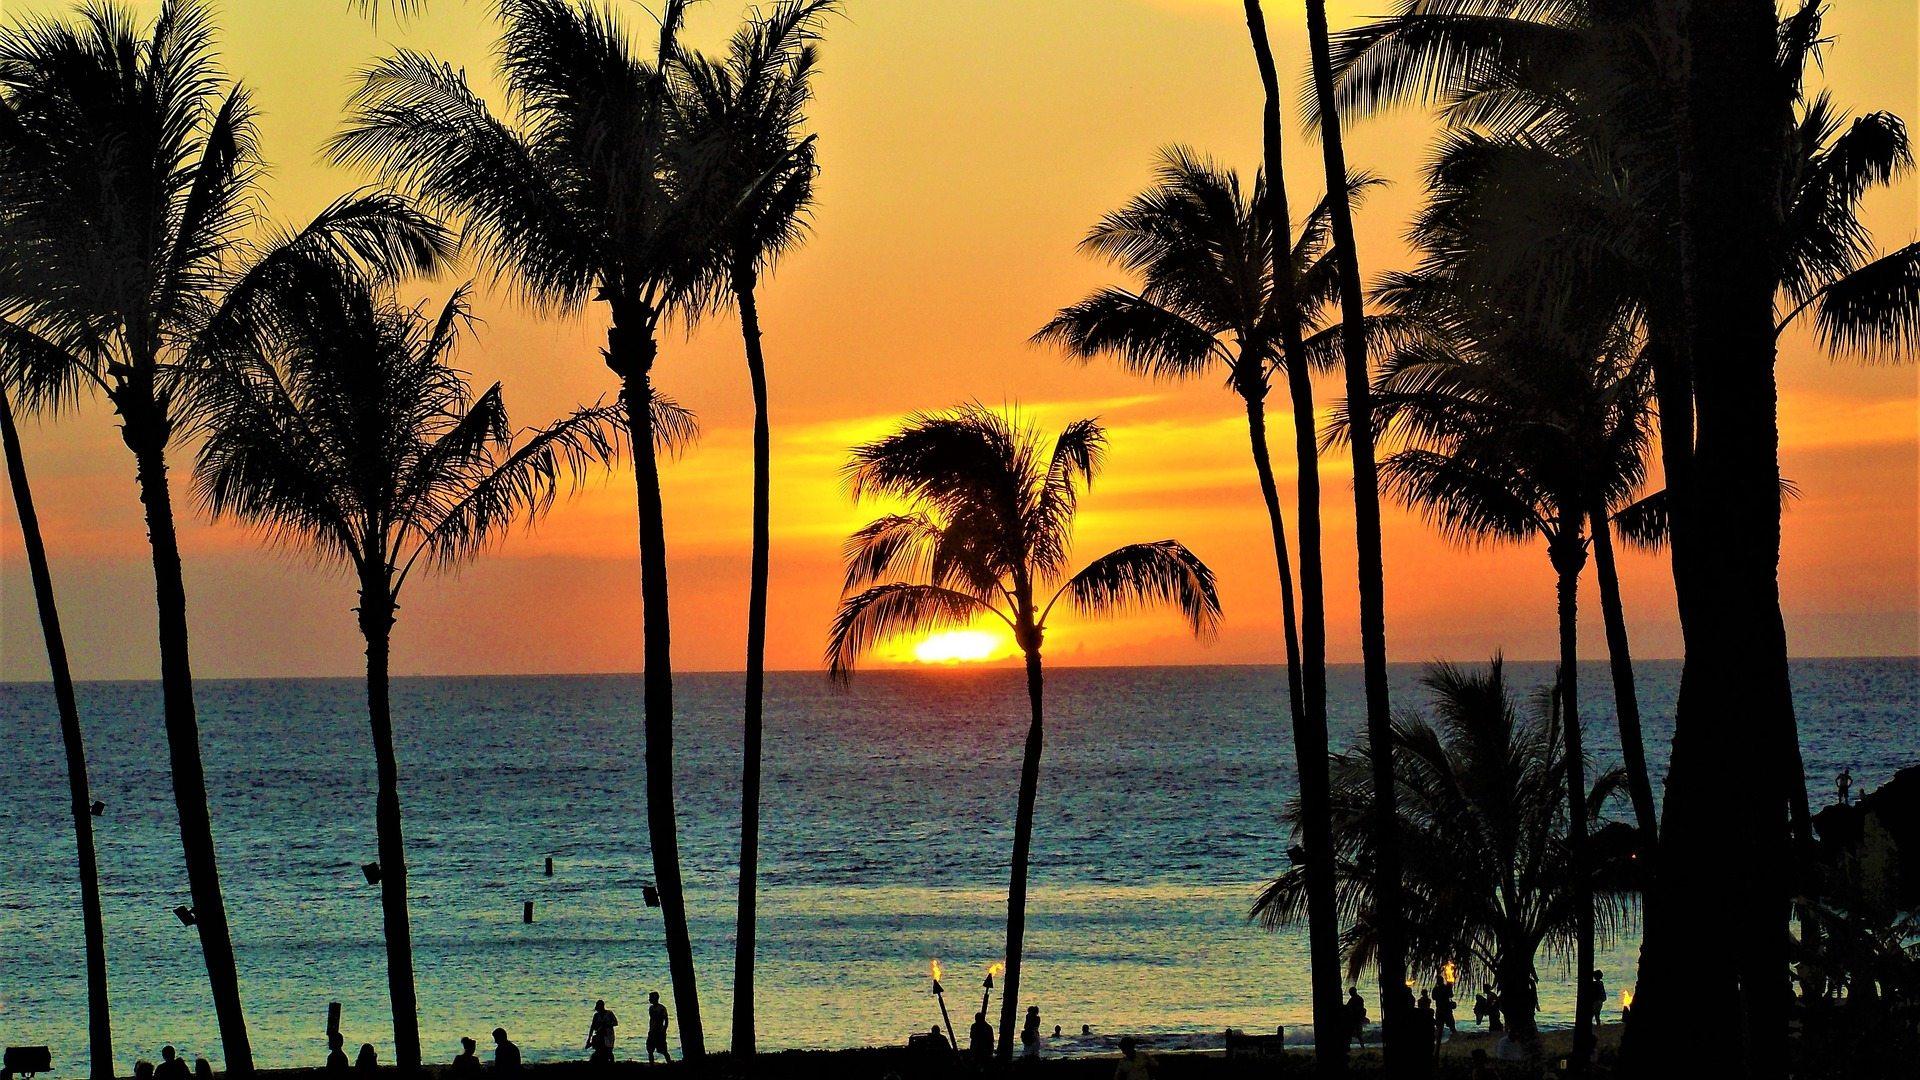 Maui, Hawaii (hmmunoz512 / Pixabay)